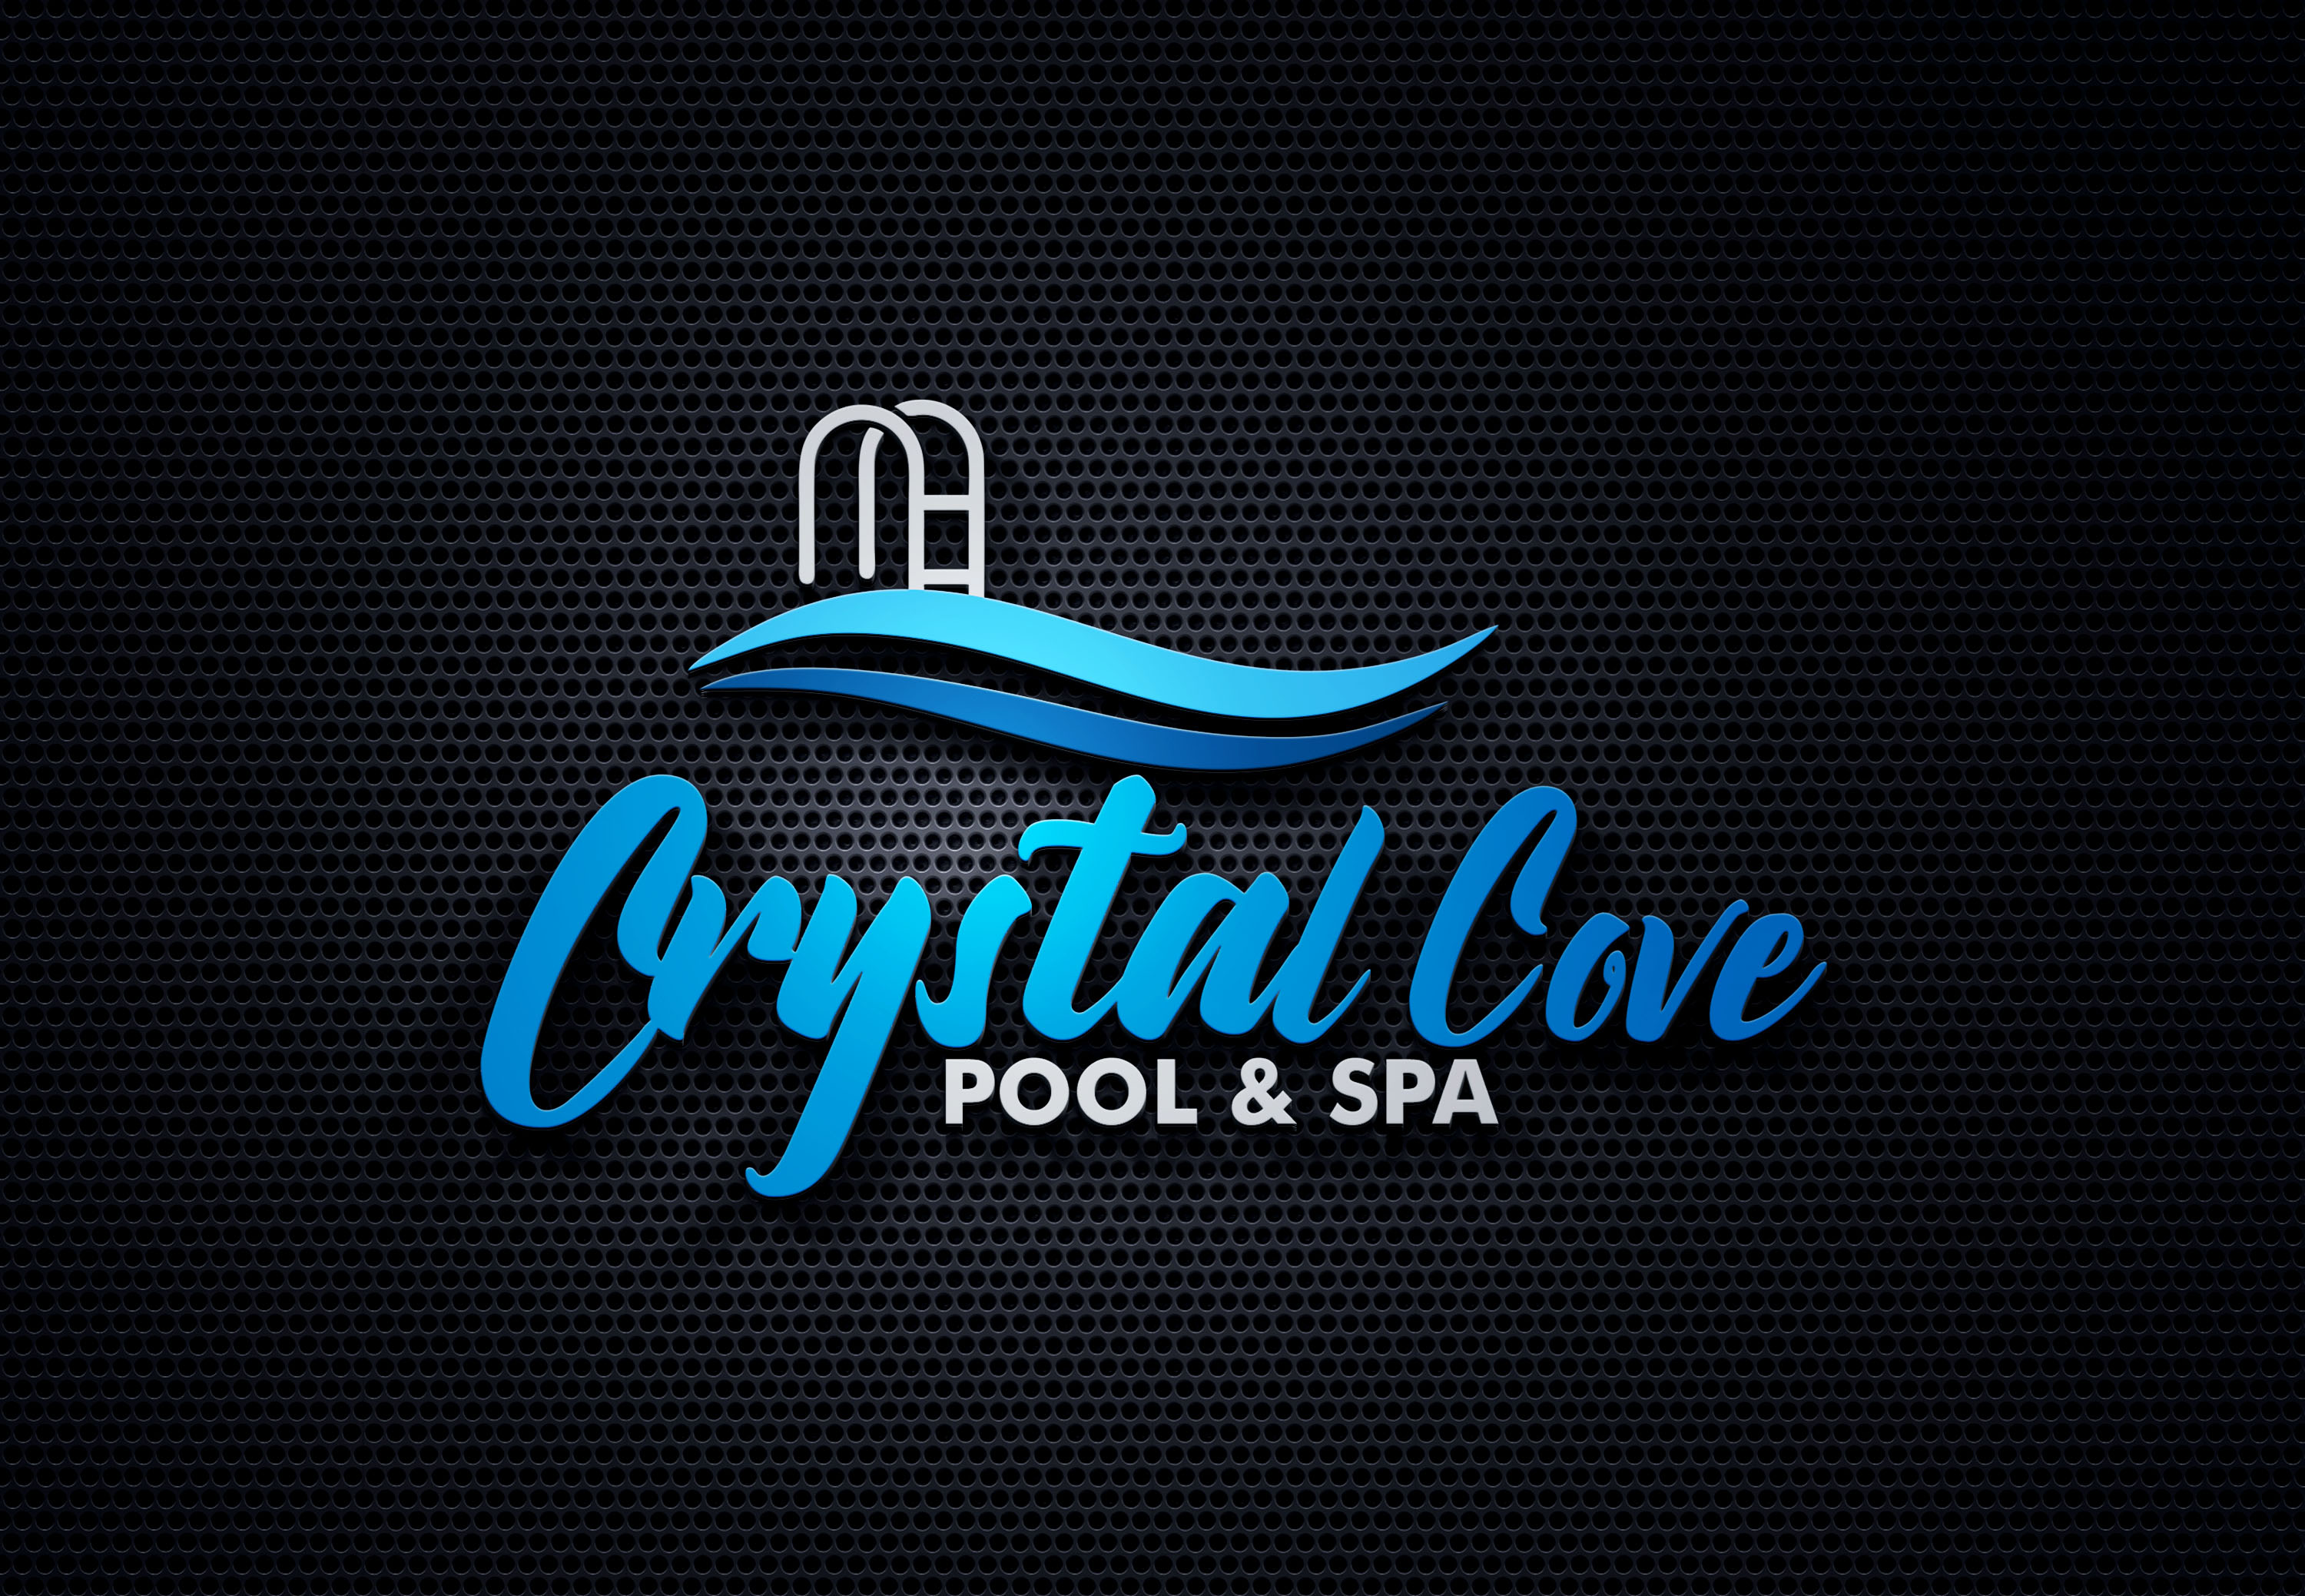 Crystal Cove Pool & Spa, LLC Logo